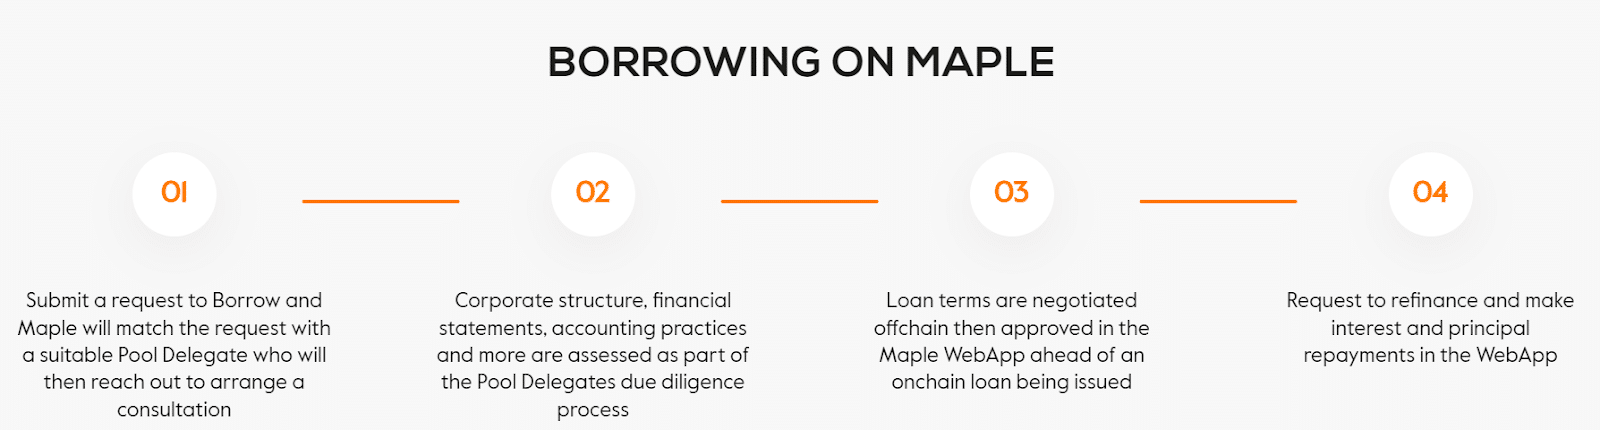 Borrowing process on Maple